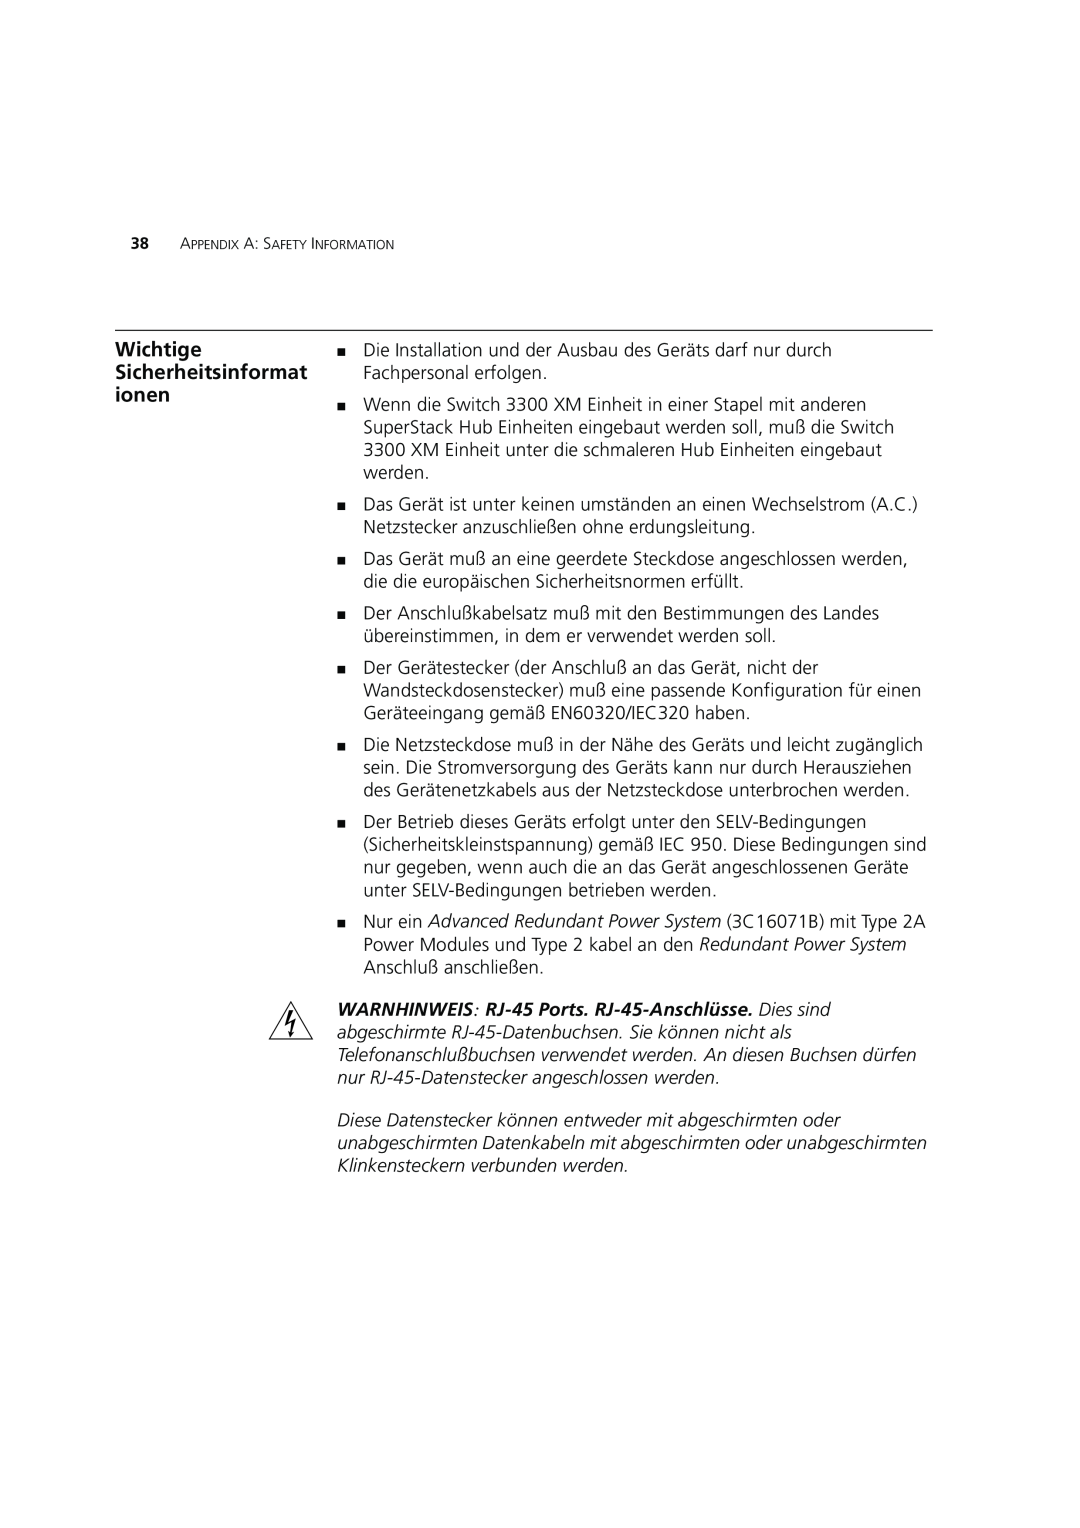 3Com DUA1698 manual Wichtige Sicherheitsinformat ionen, Appendix A Safety Information 